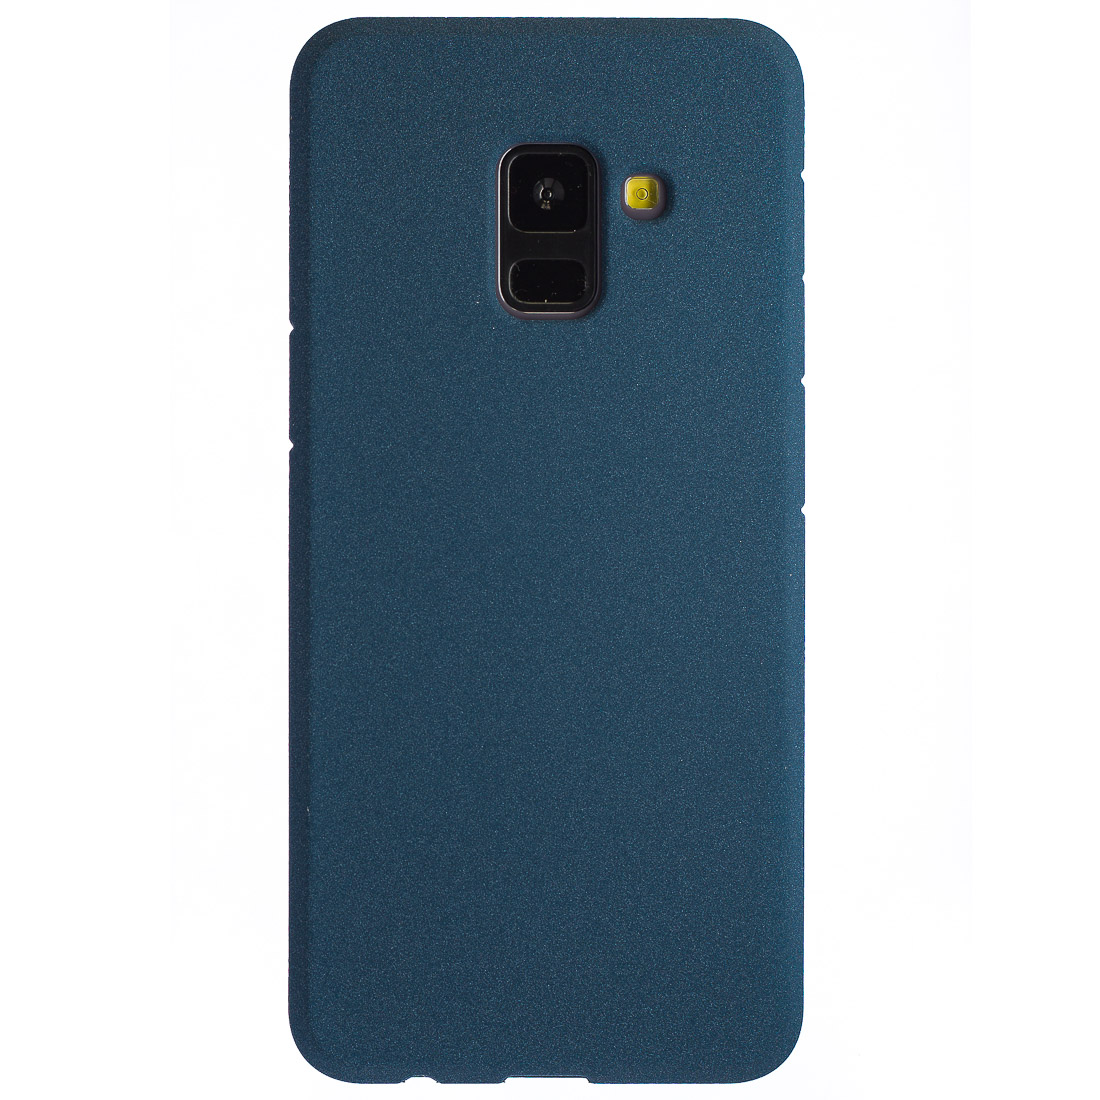 Husa Silicon Samsung Galaxy A8 2018, Albastru Sand thumb